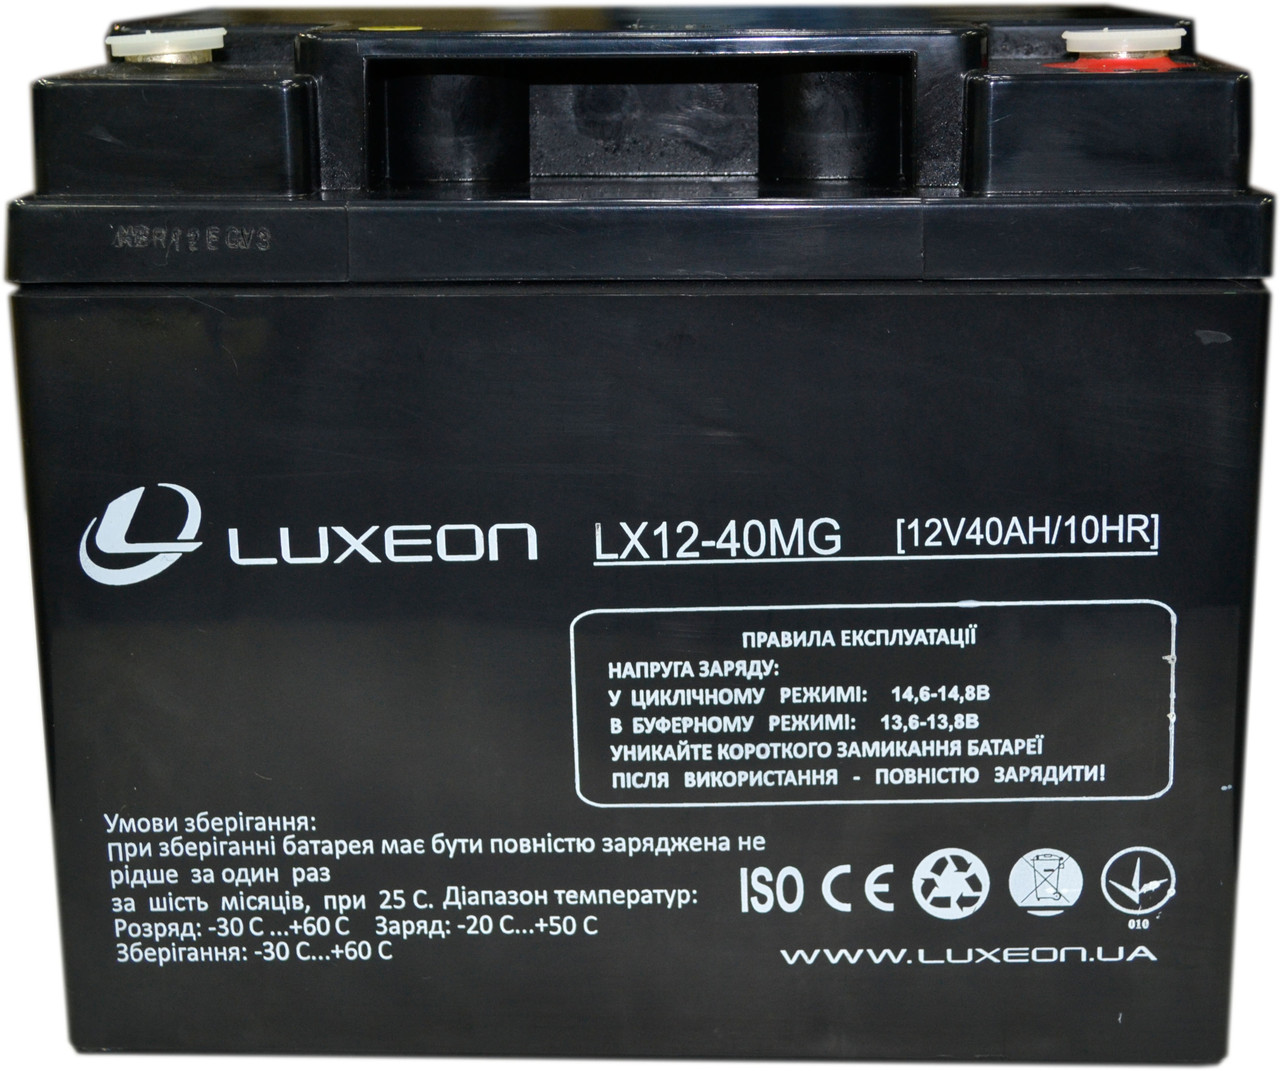 Акумулятор Luxeon lx12-40mg 12v 40ah